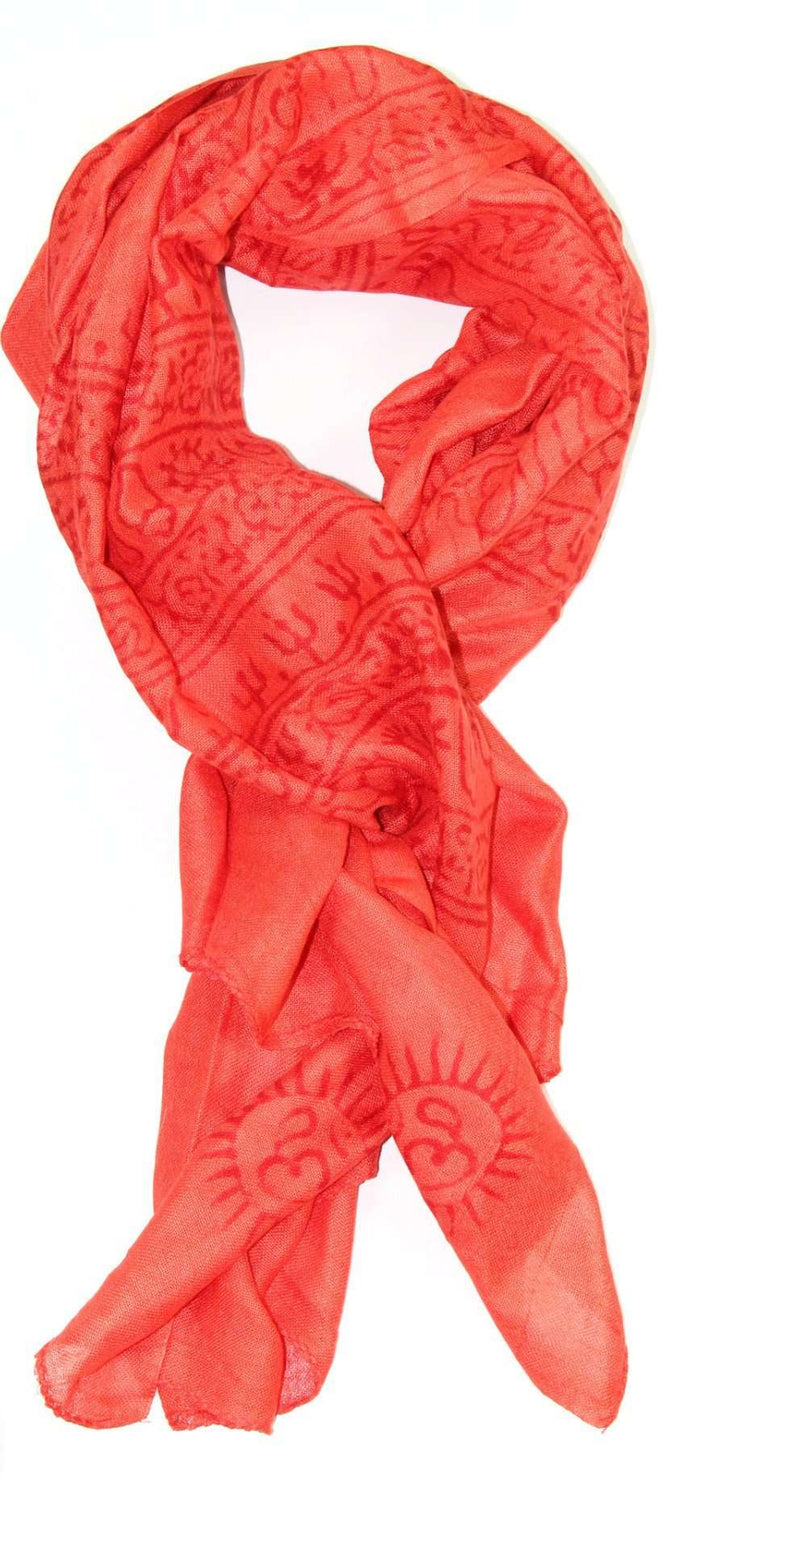 Red-Orange Primordial Om & Asian Symbols Printed Scarf